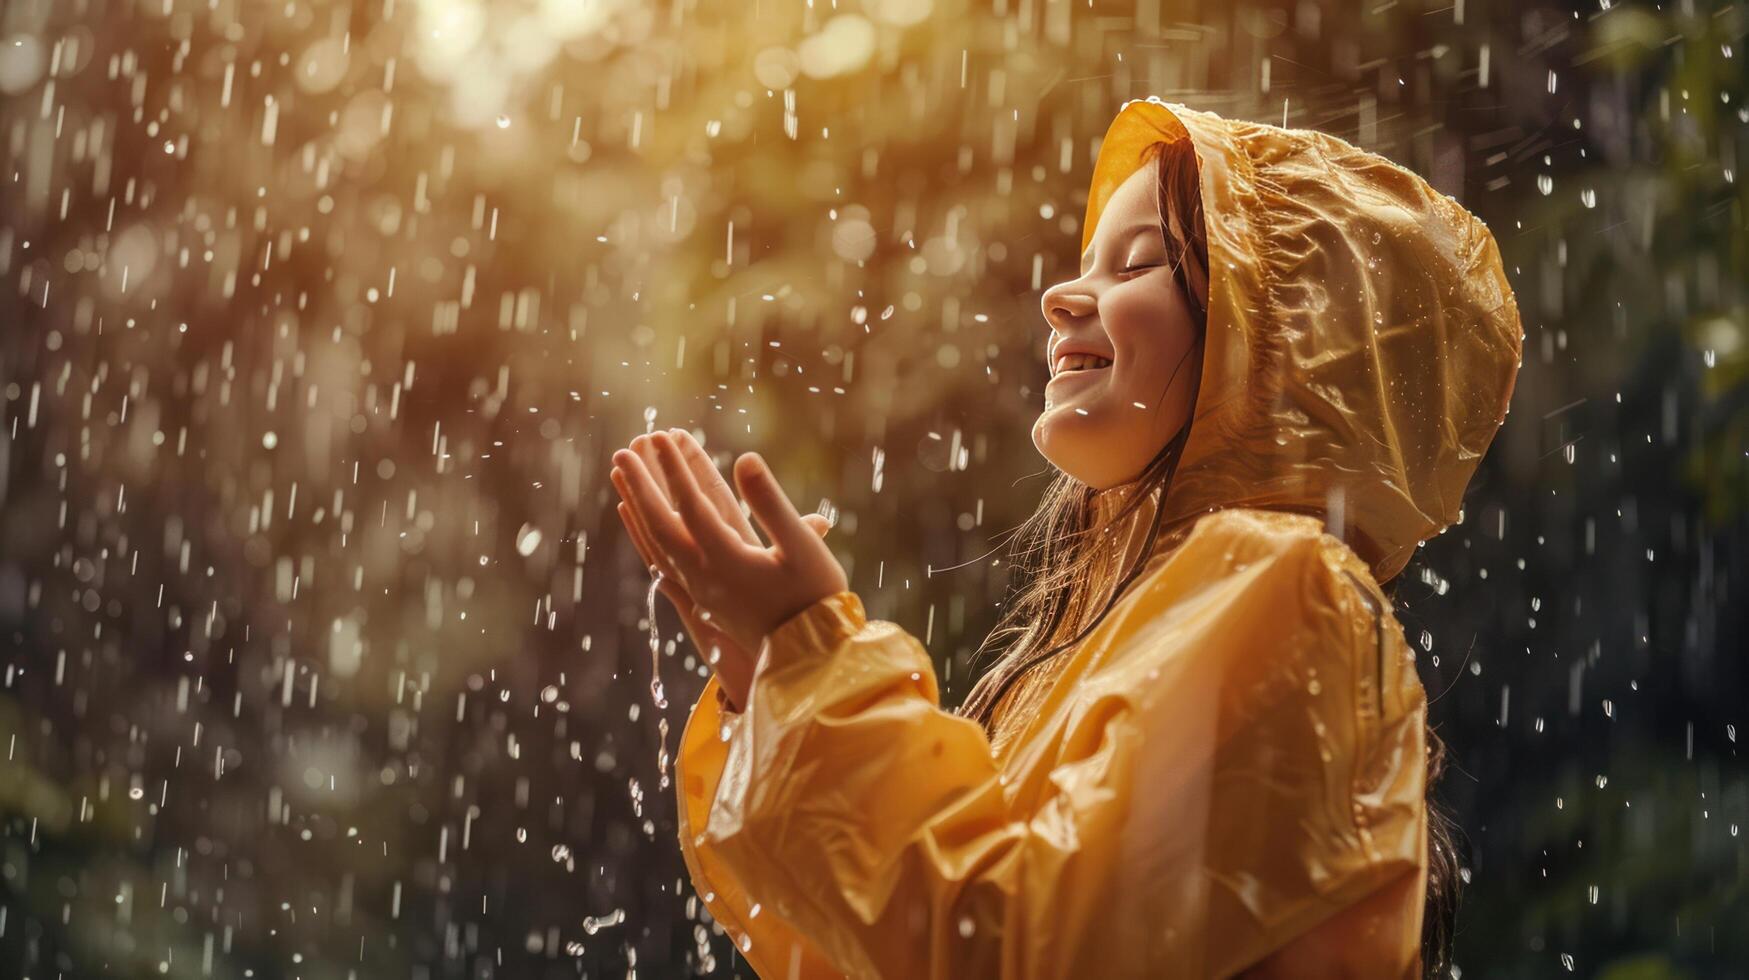 AI generated Joyful Moment in the Rain photo